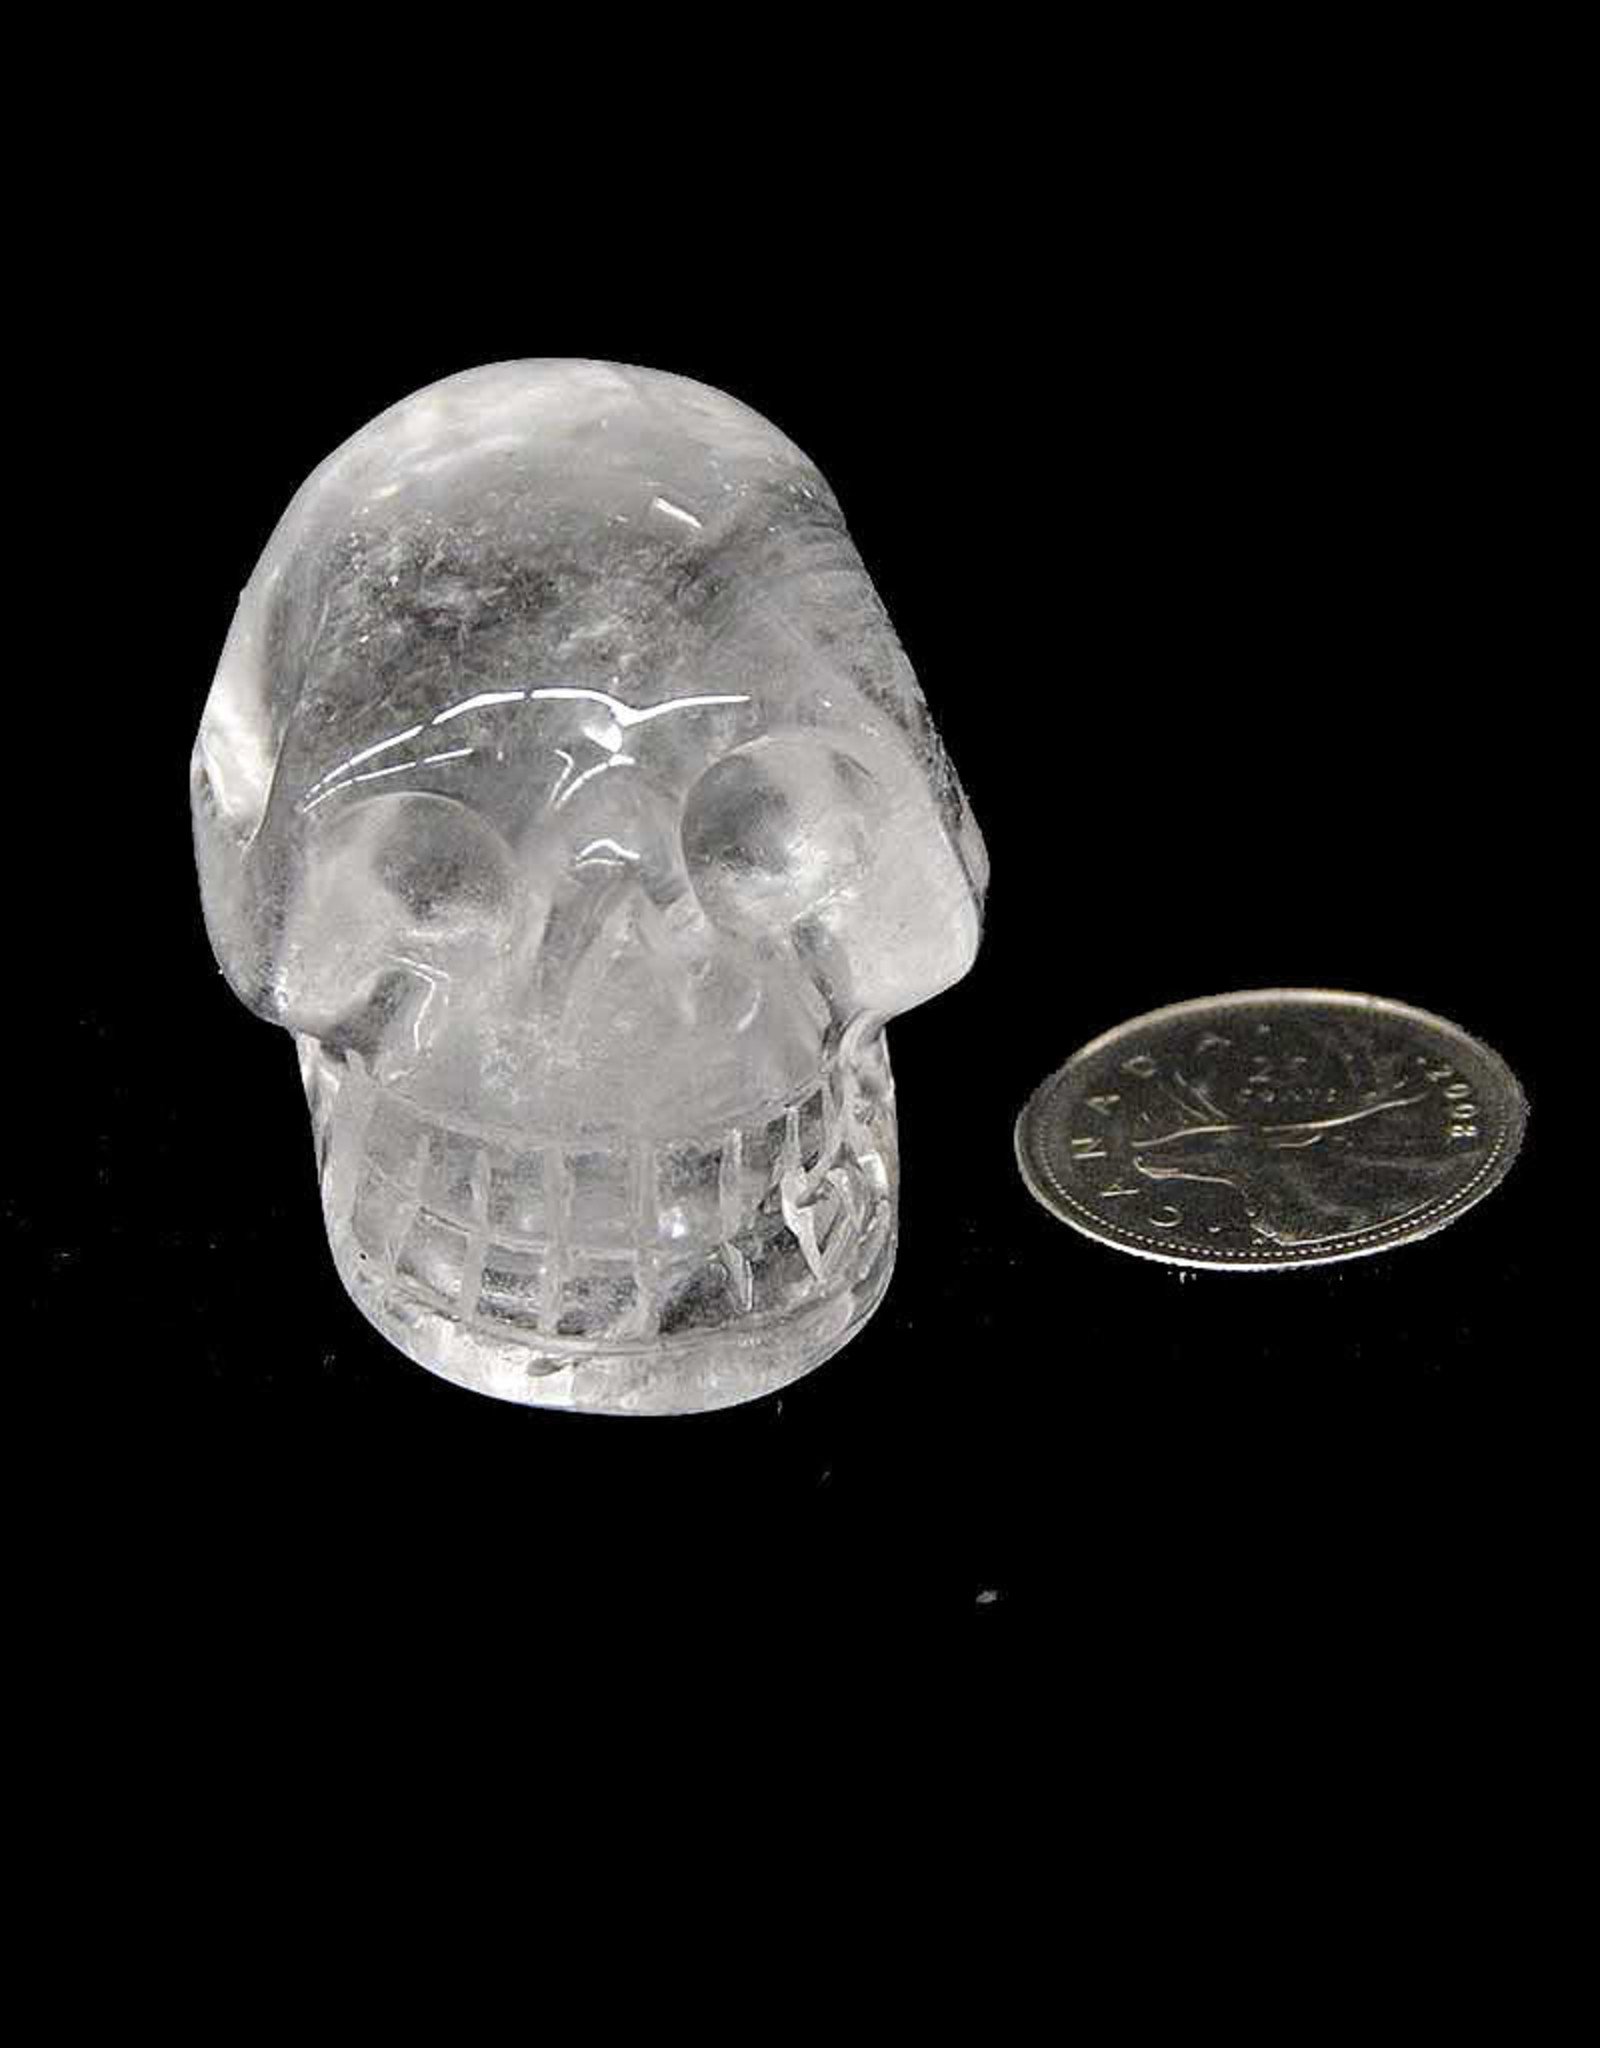 Clear Quartz Skull 2in - $49